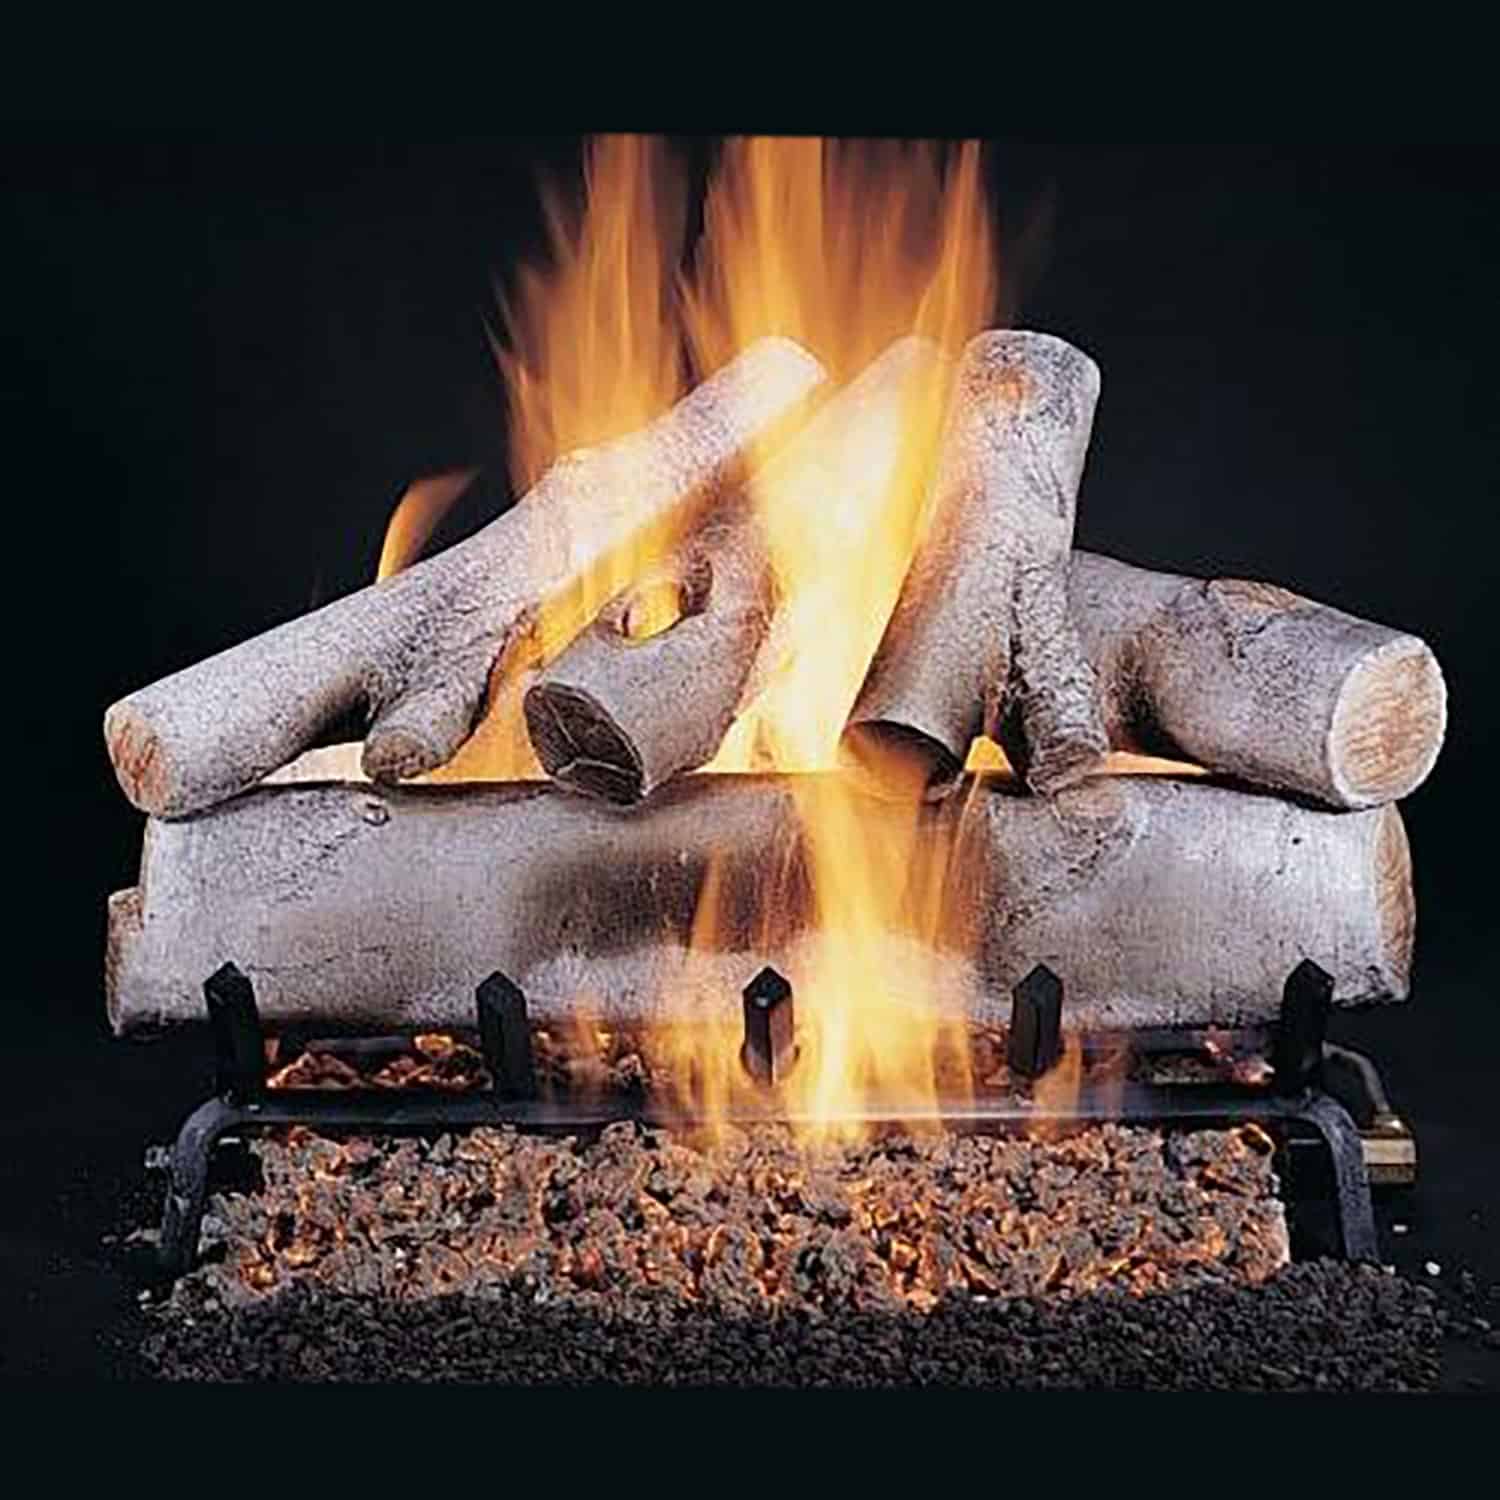 birch logs for fireplace